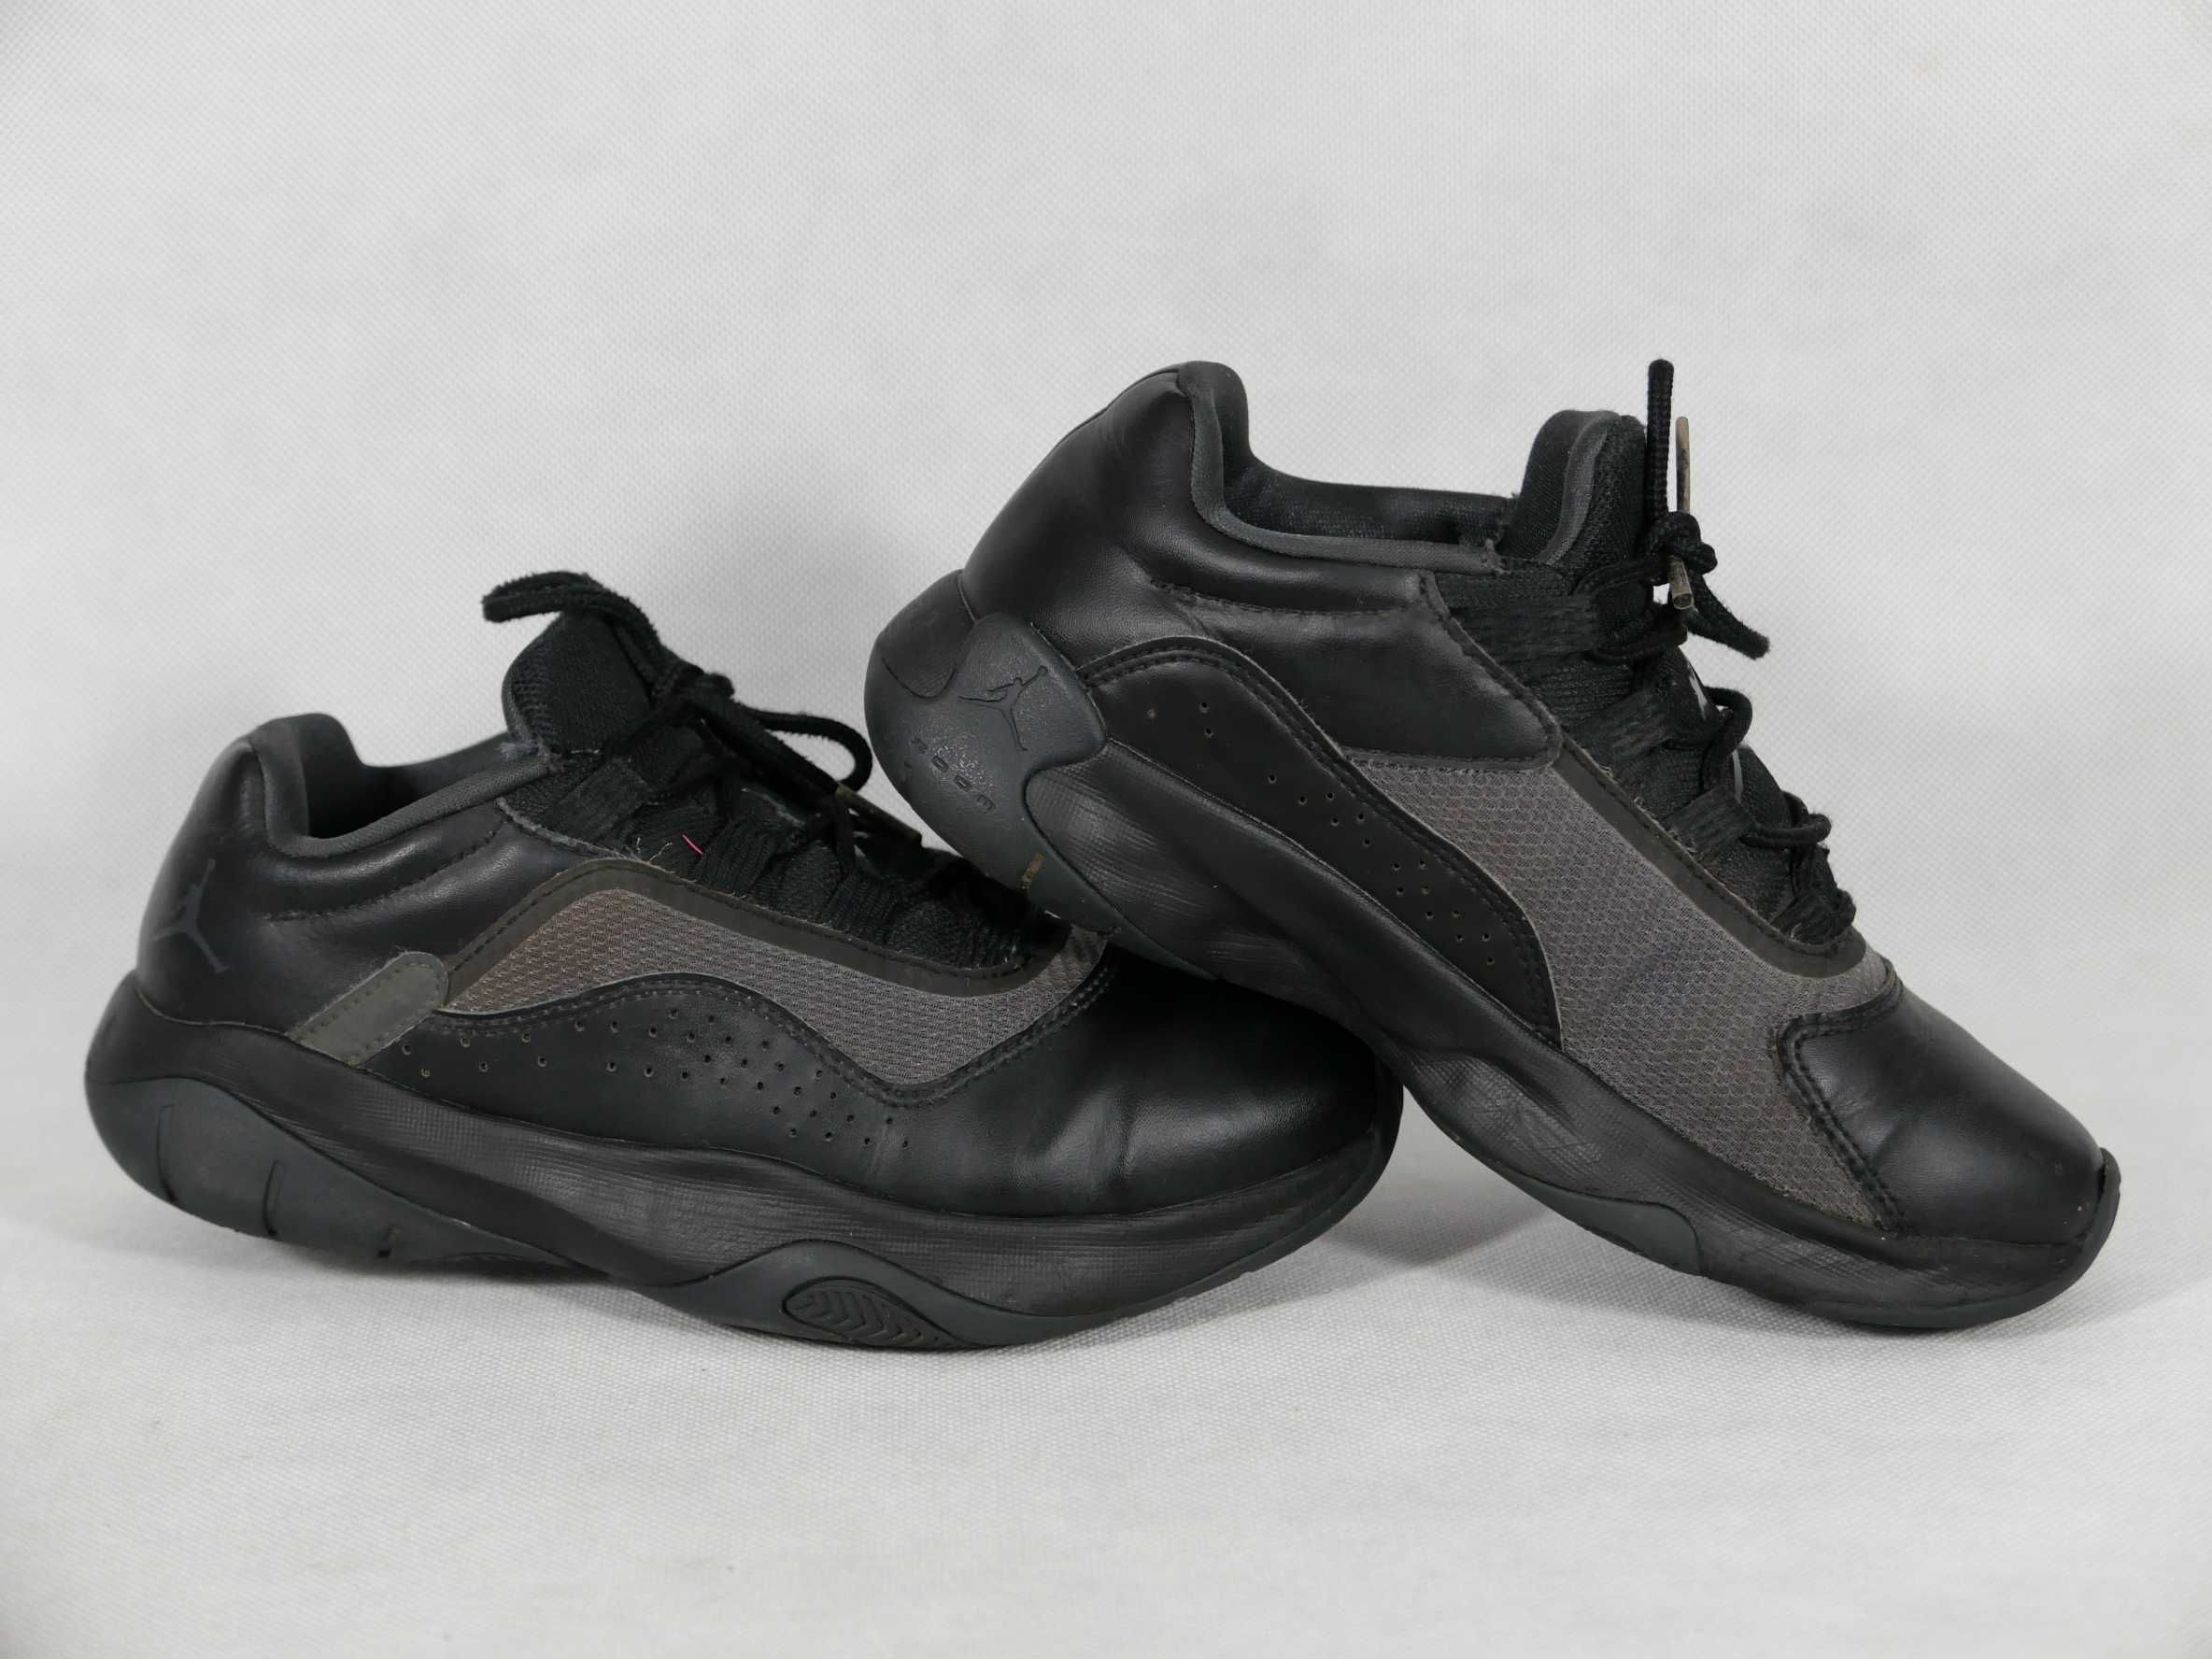 Air Jordan 11 buty sportowe czarne skórzane 36,5